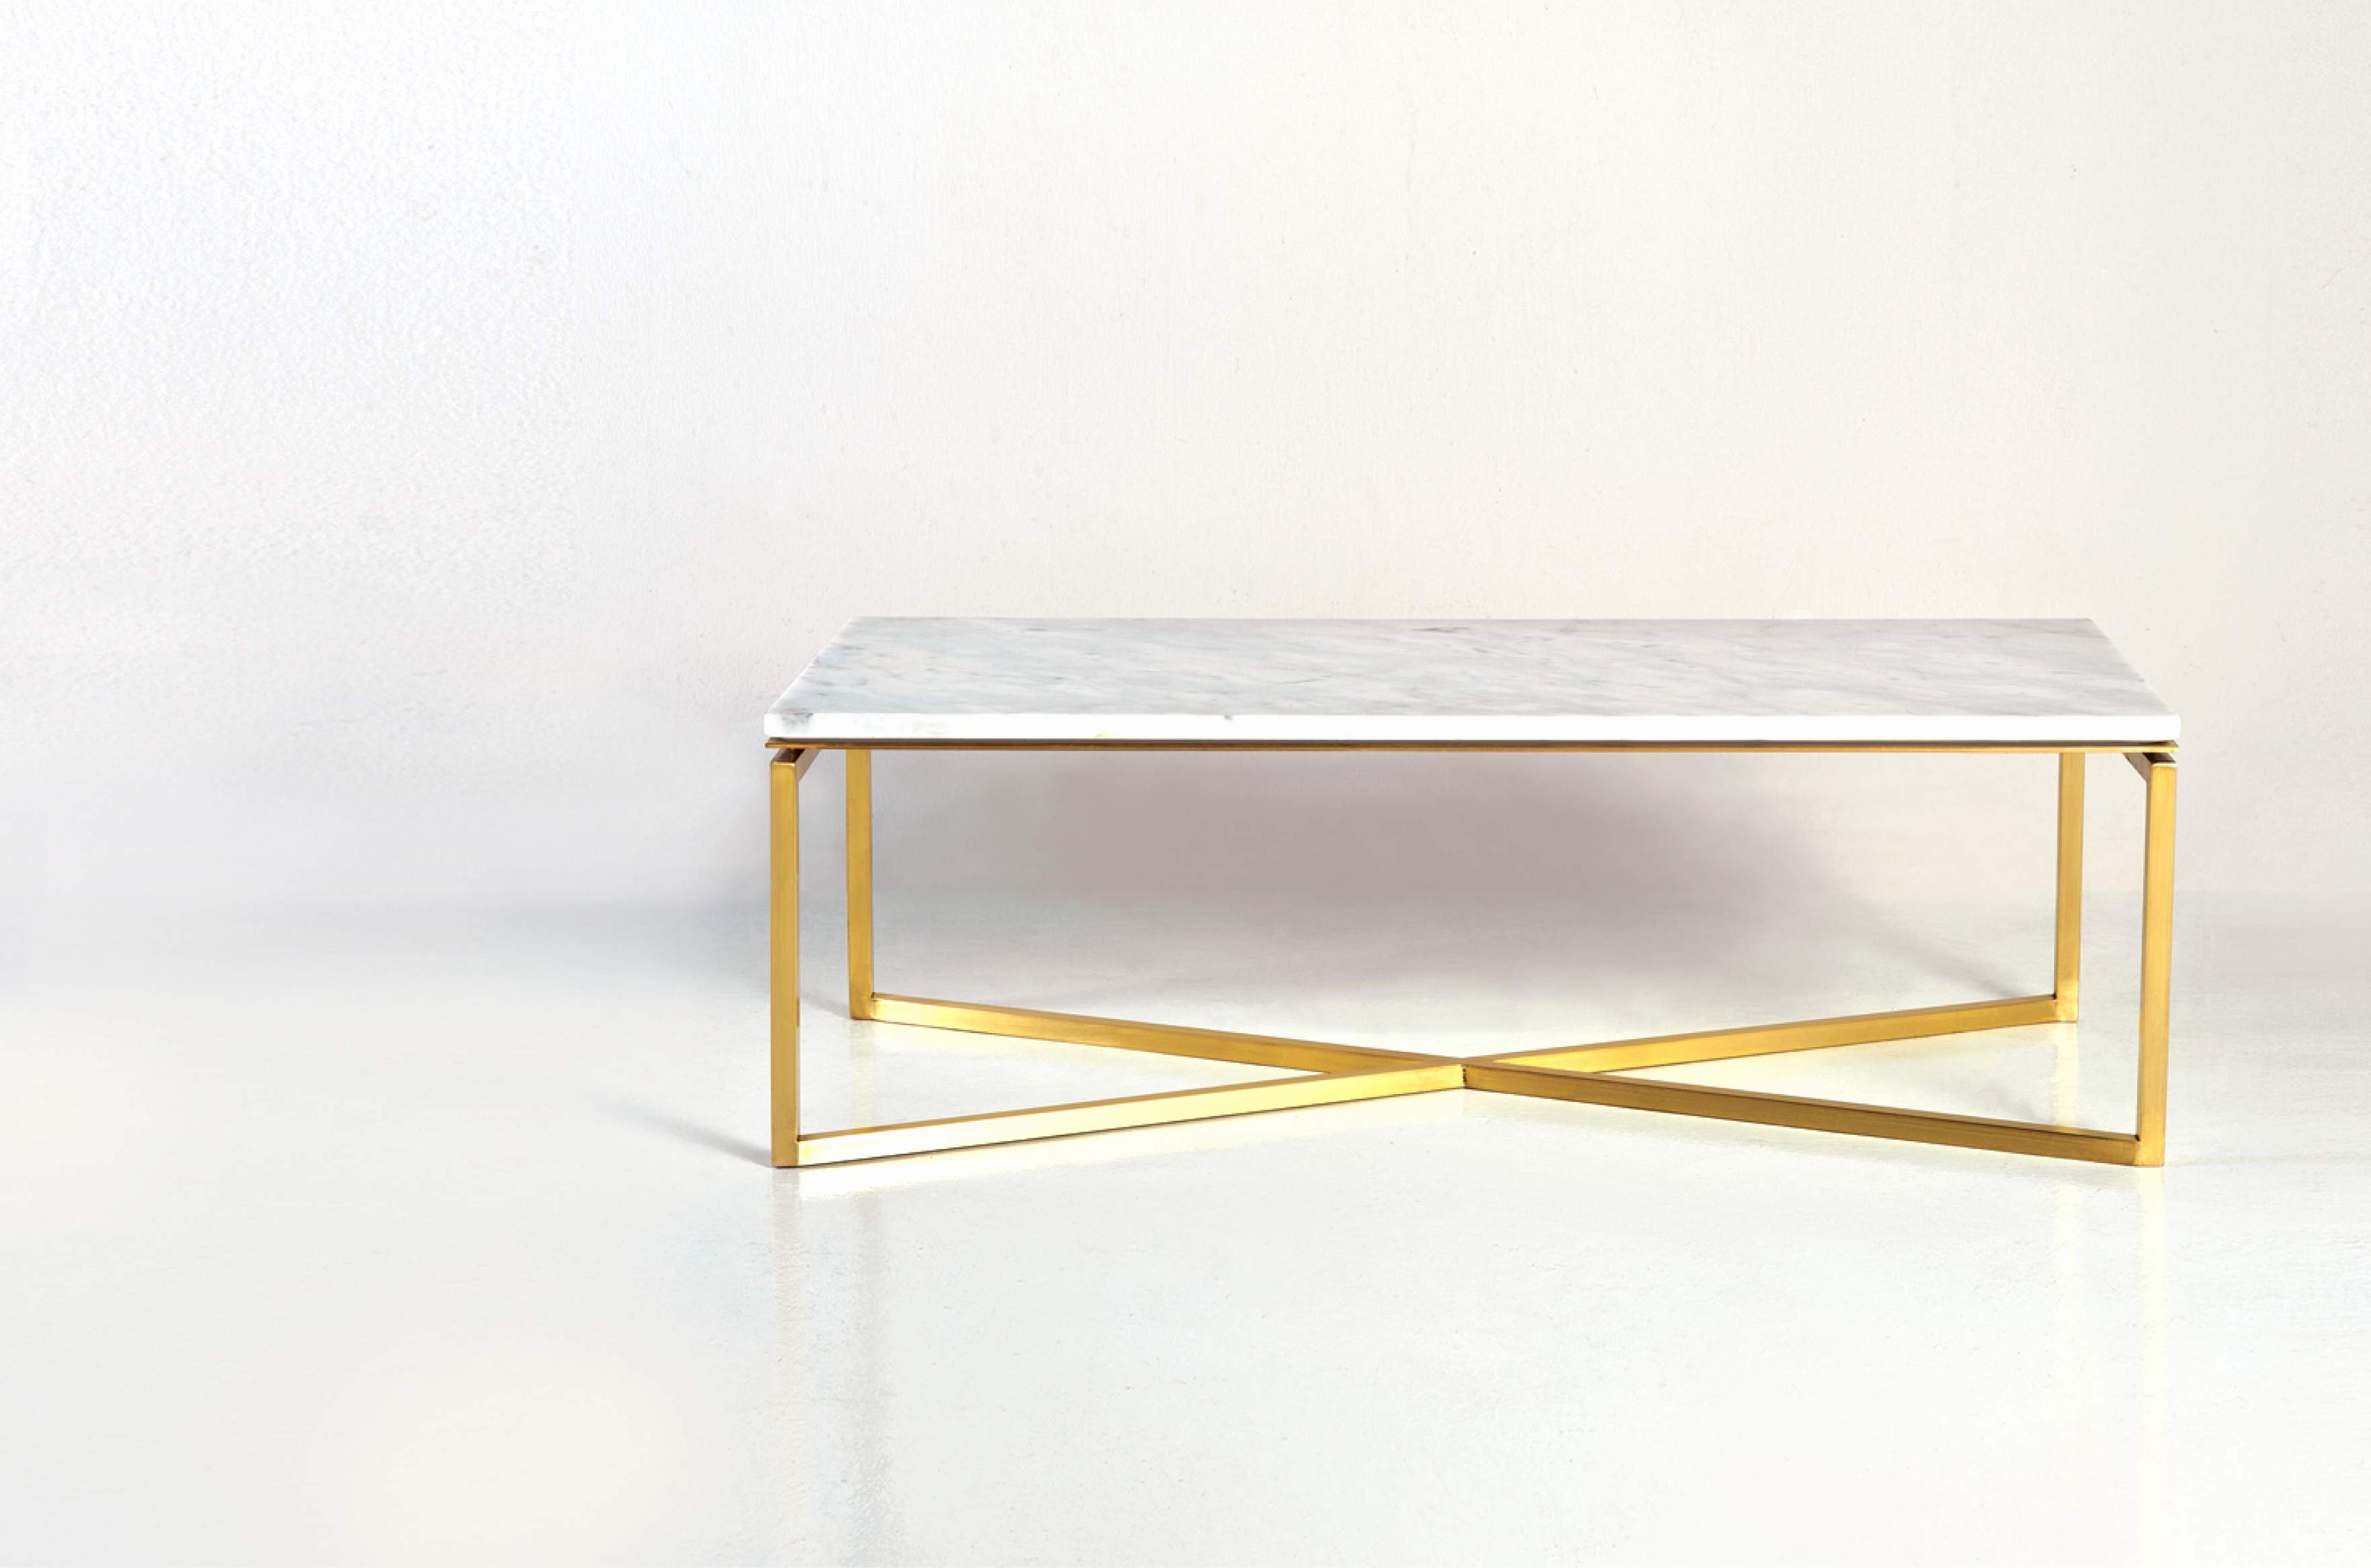 Rectangular Brass Finish And Glass Coffee Tables In 2019 12 Glass Coffee Table With Brass Legs Images (View 4 of 20)